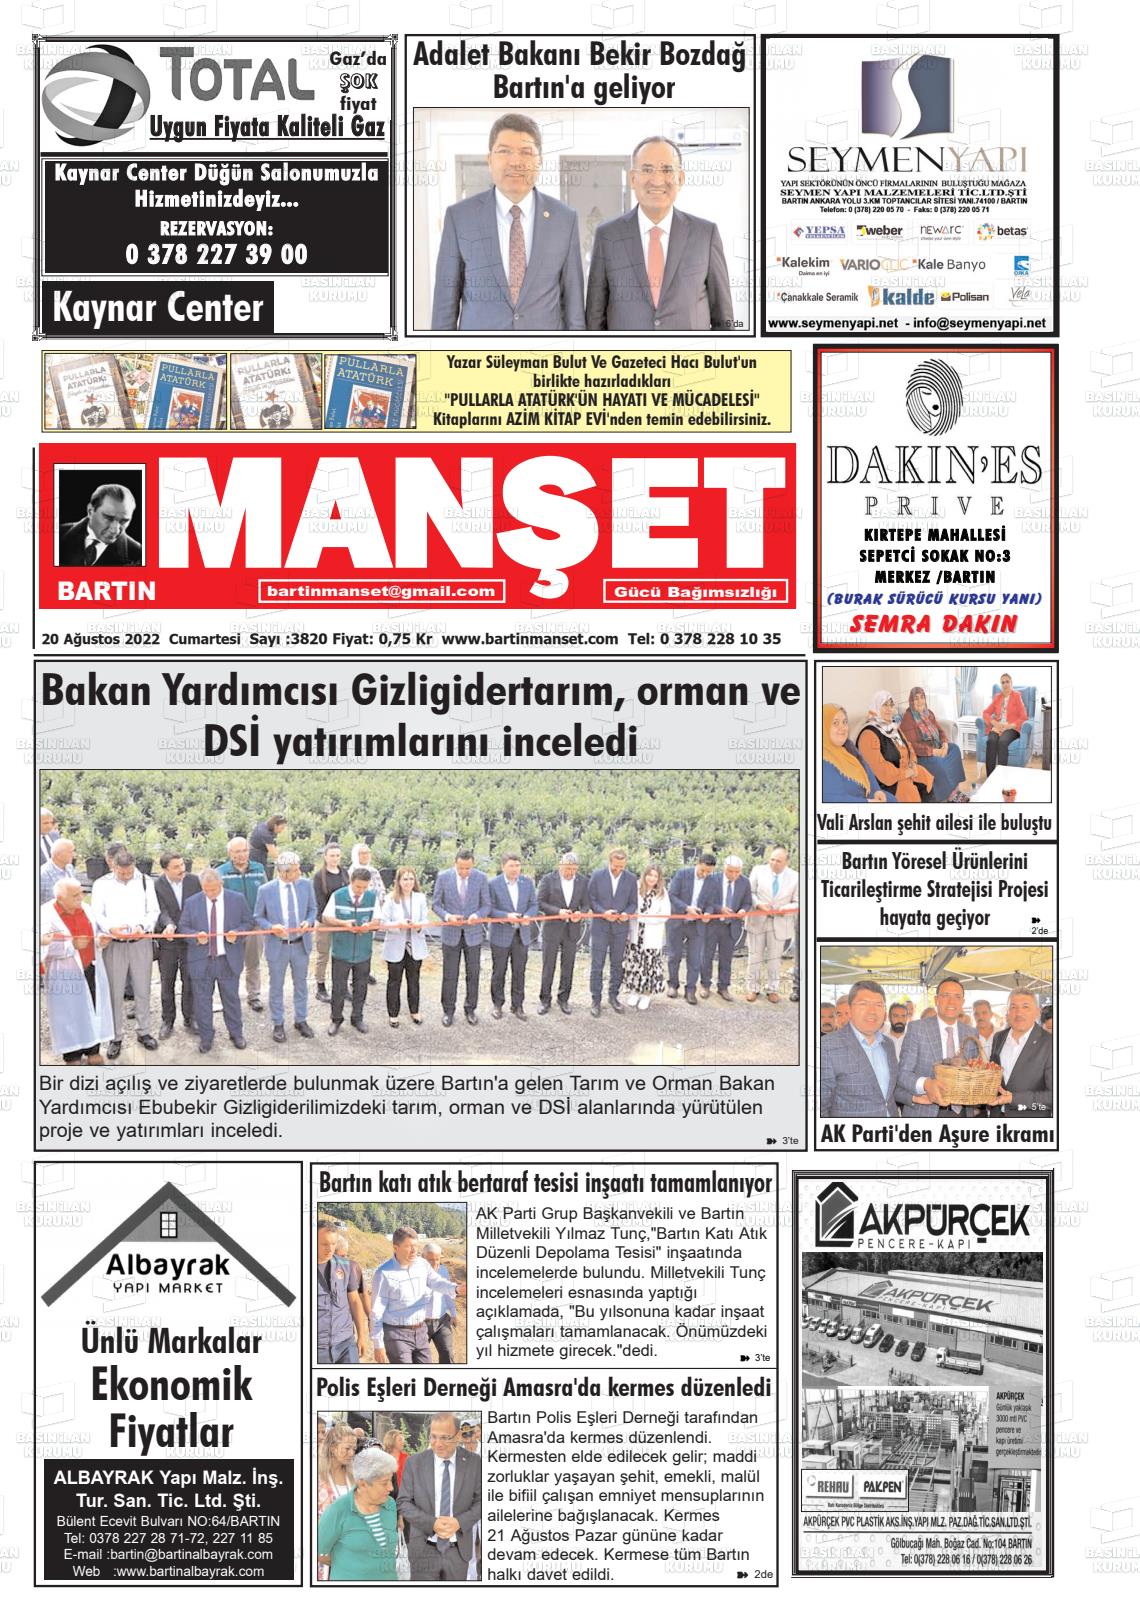 20 Ağustos 2022 Bartın Manşet Gazete Manşeti